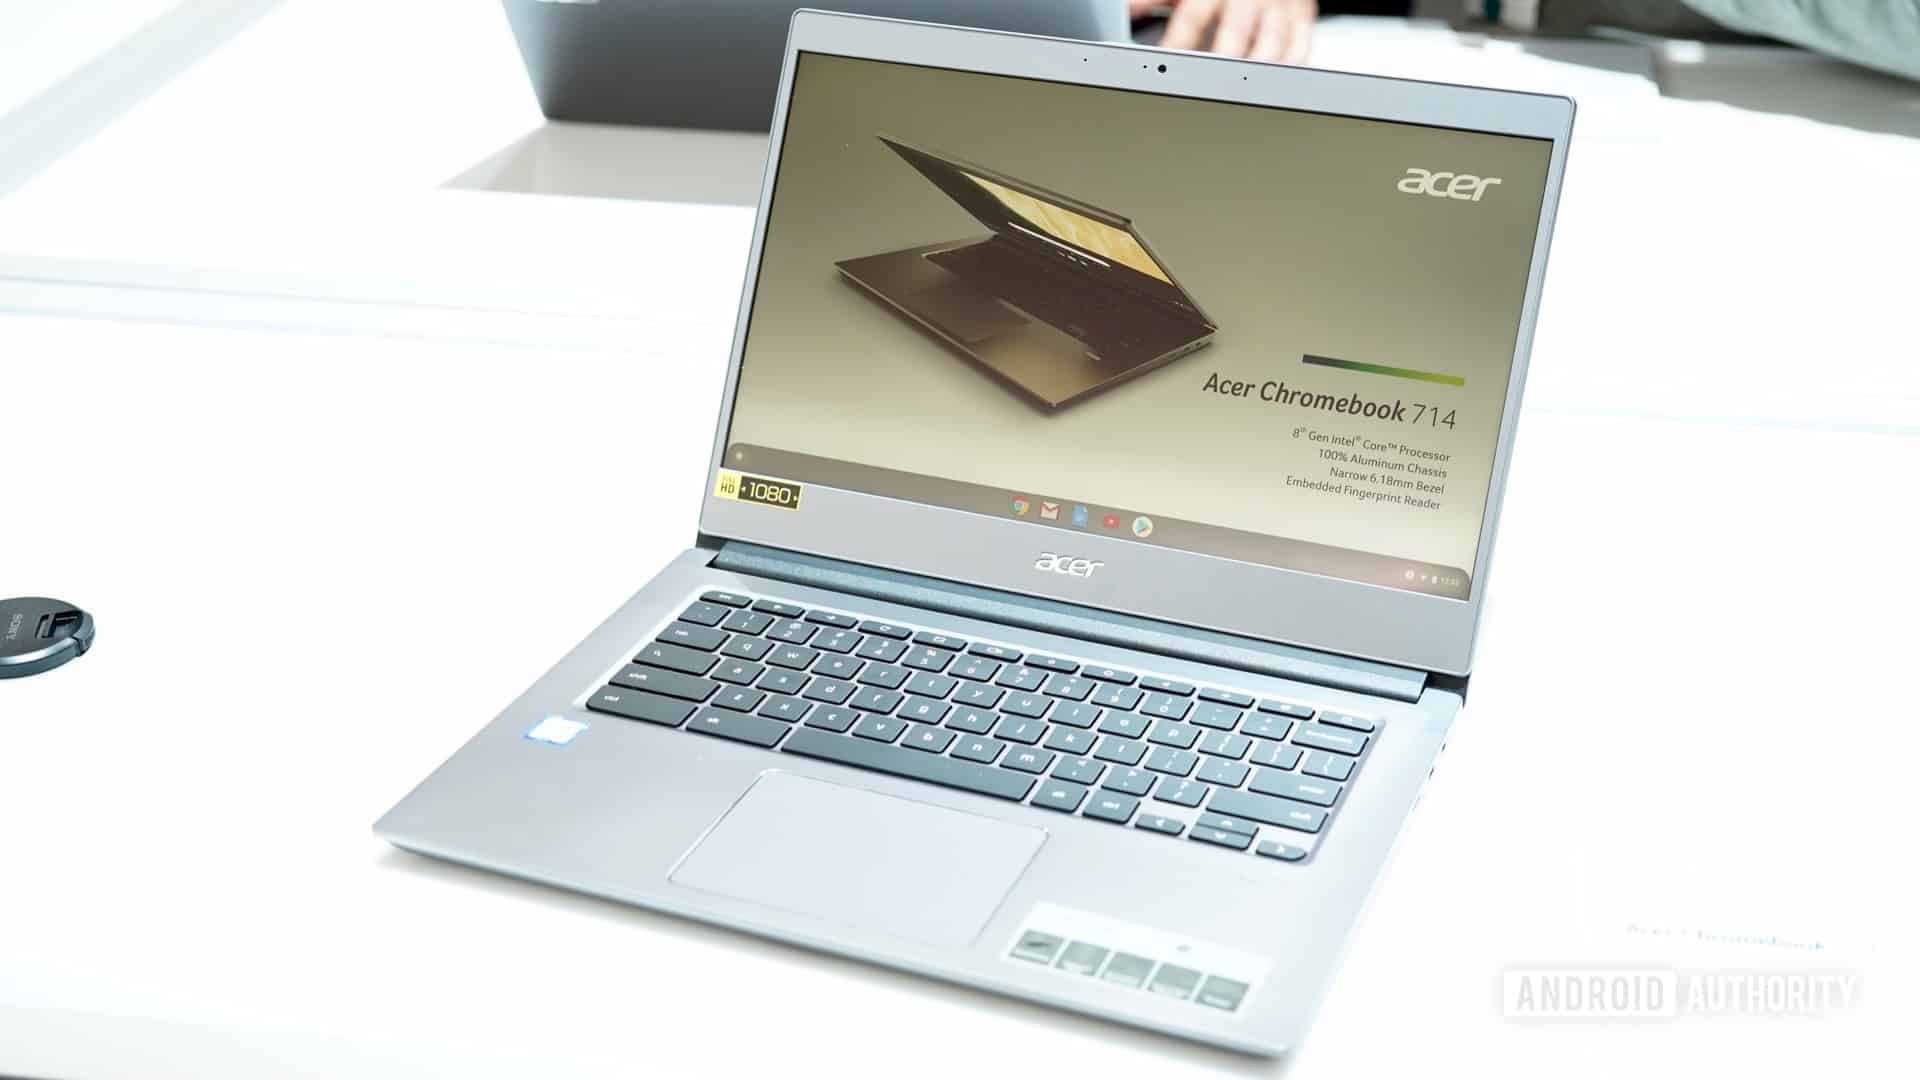 Acer Chromebook 714 lid open